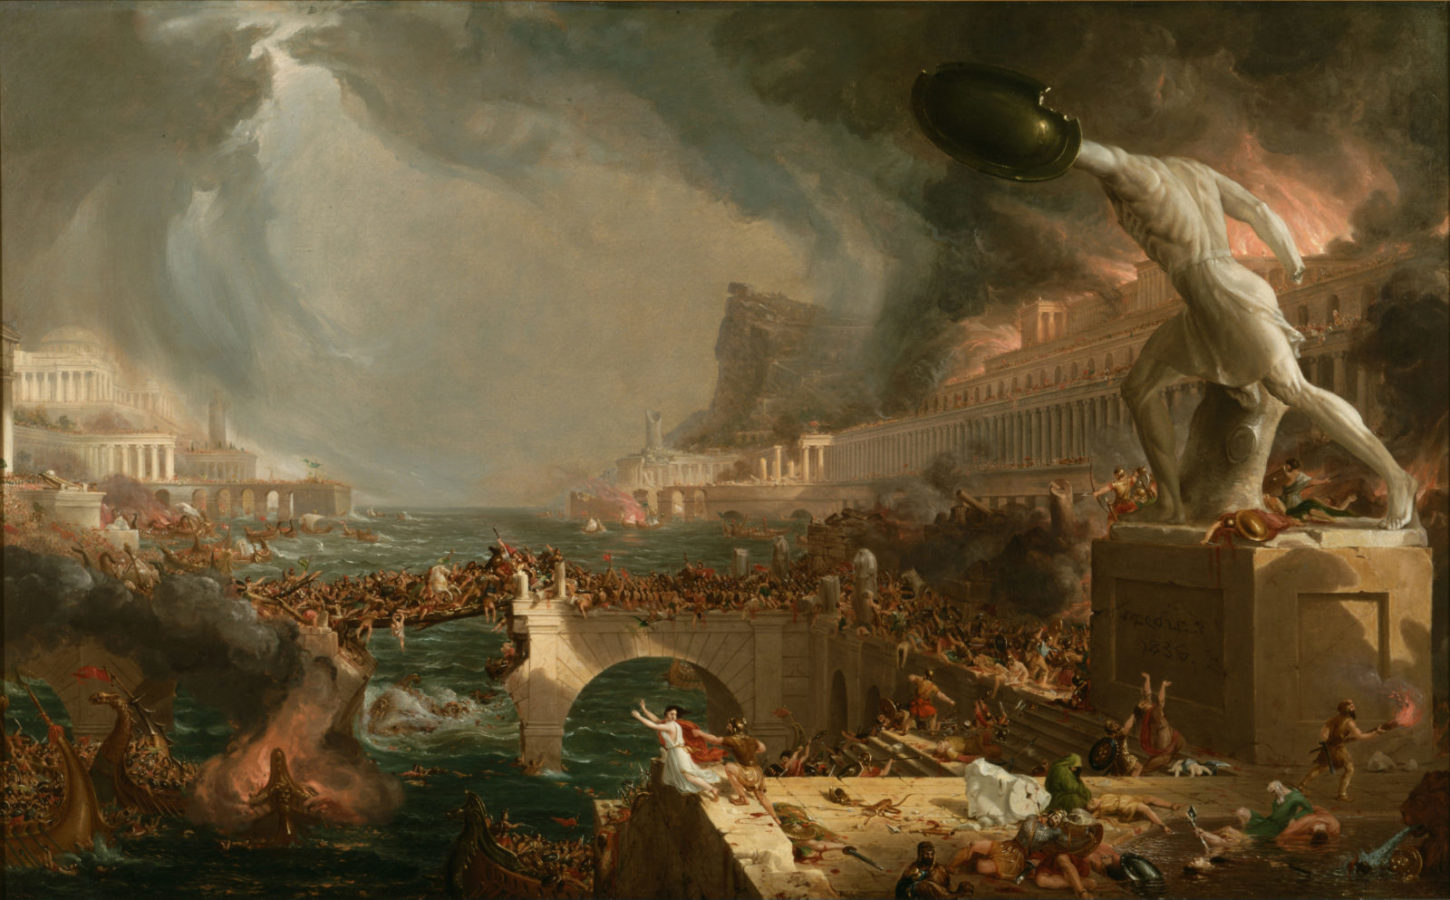 Painting the Fall of the Roman Empire | DailyArt Magazine | Art History